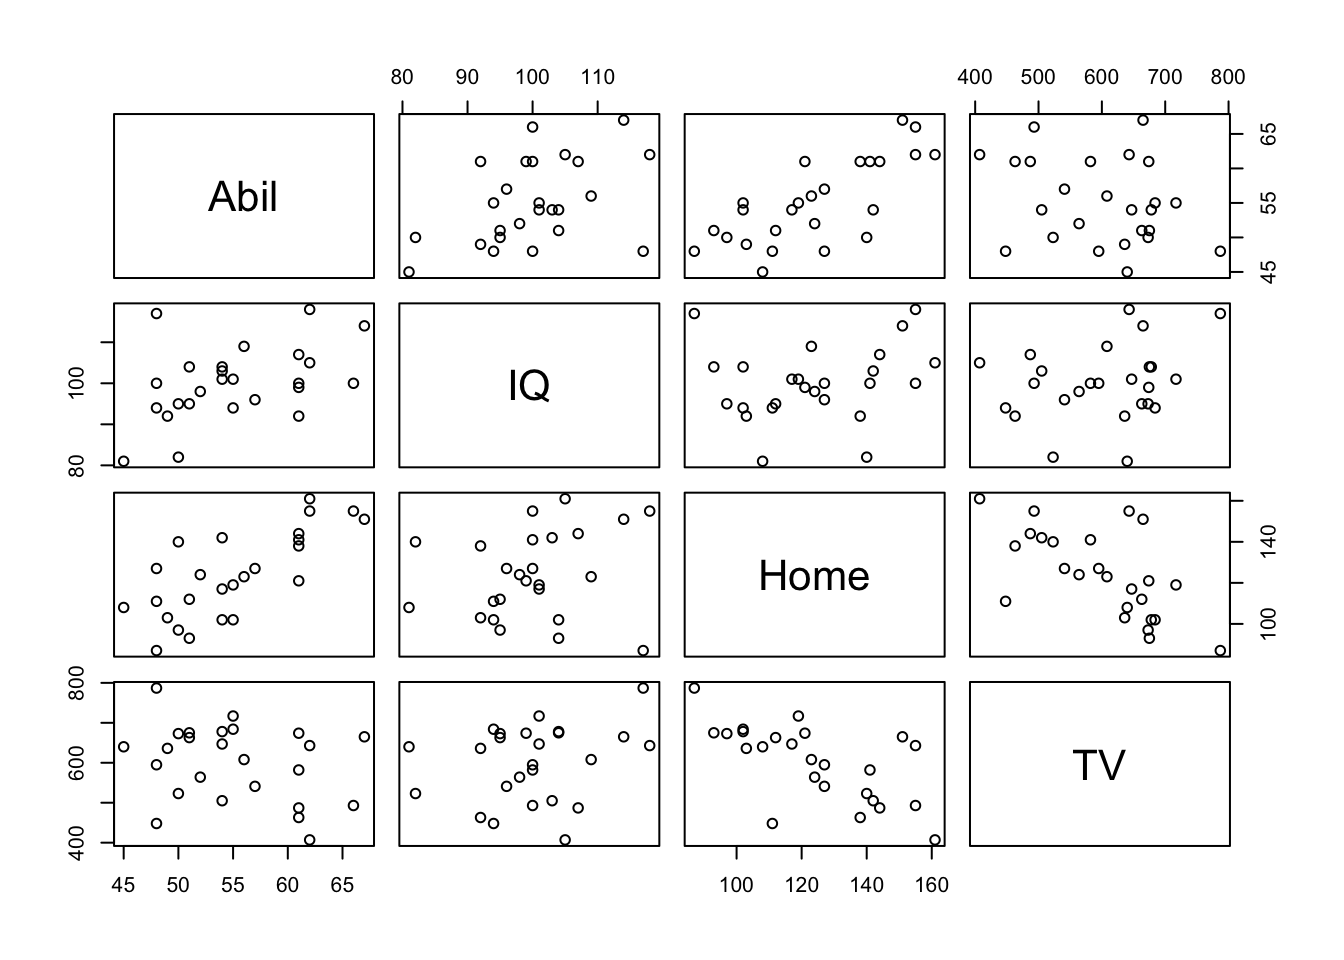 Matrix of Correlation plots of Miller and Haden (2013) data